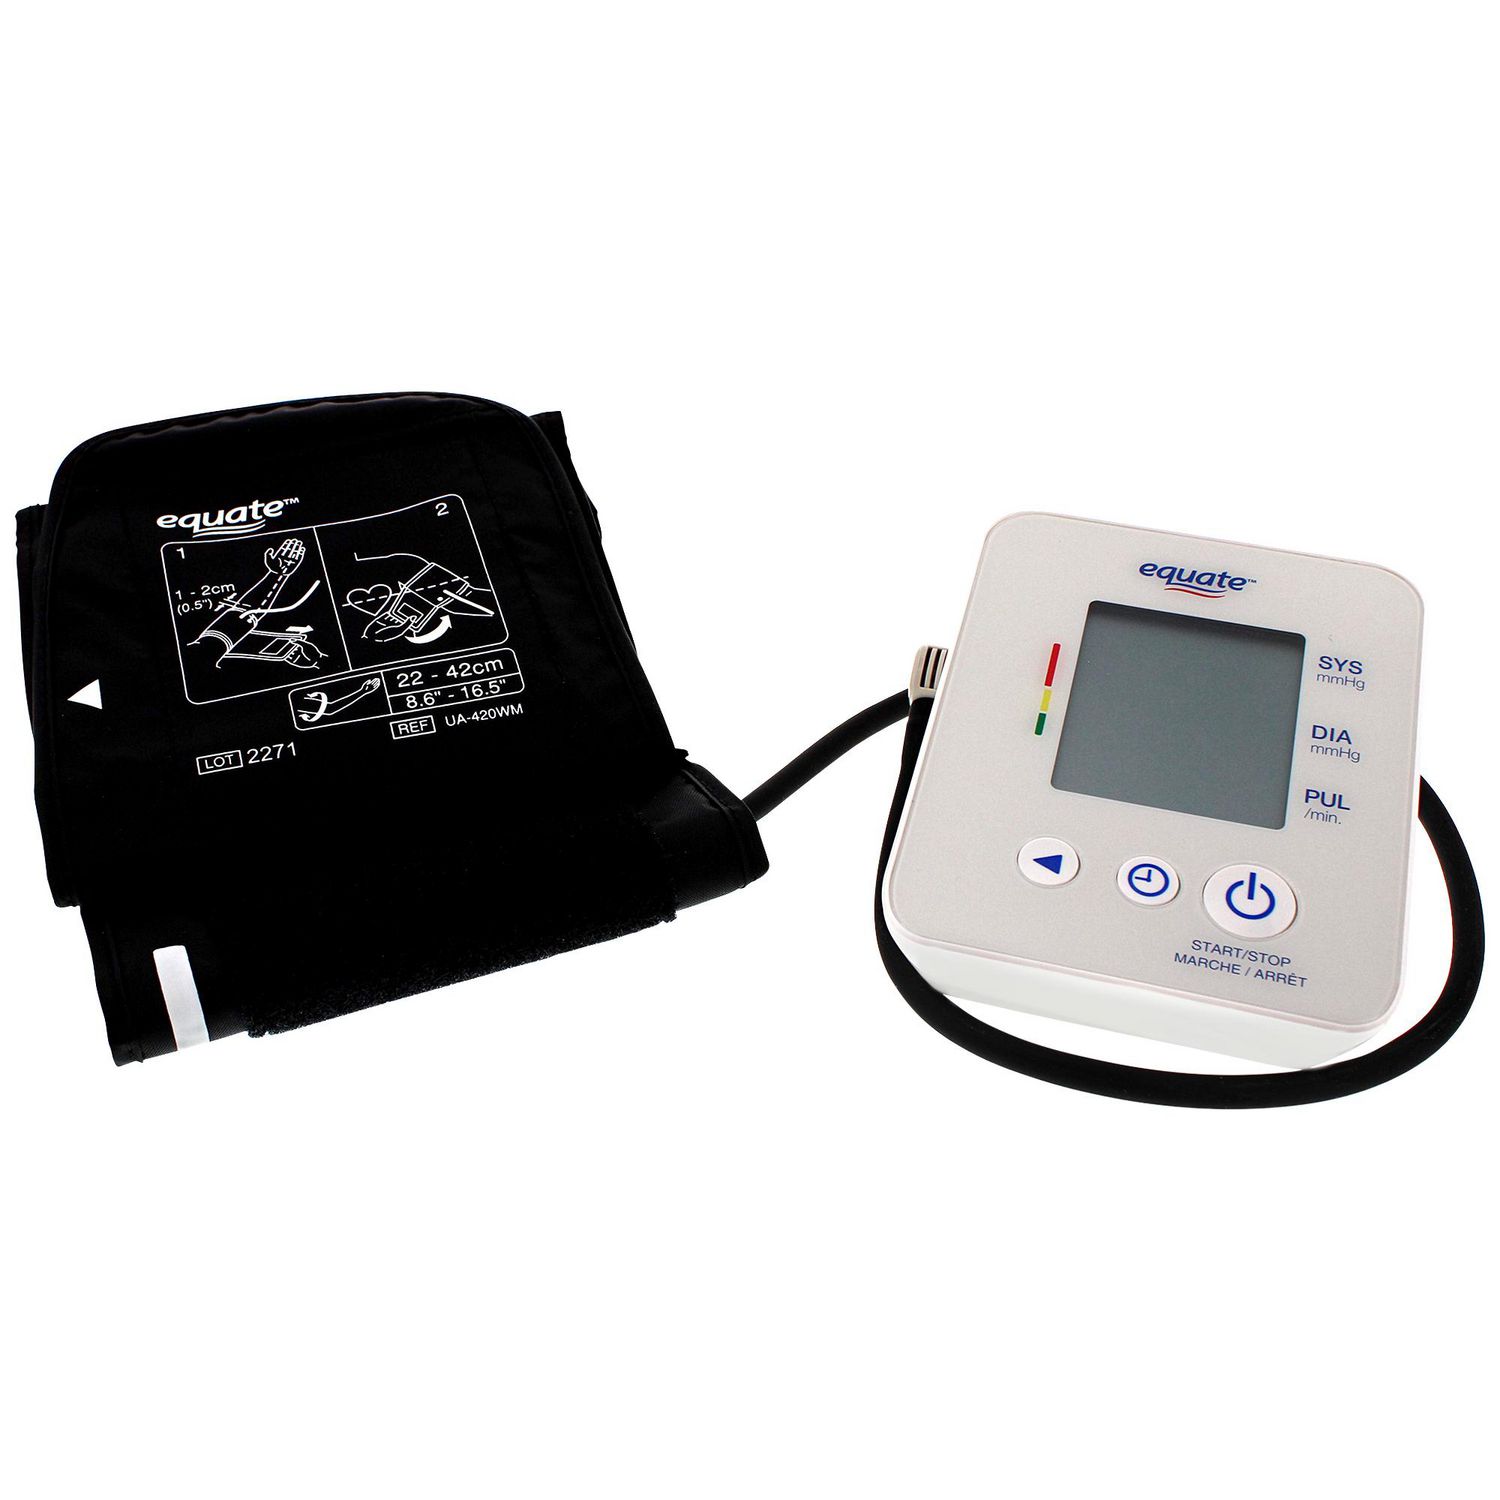 Equate 4000 Series Upper Arm Blood Pressure Monitor